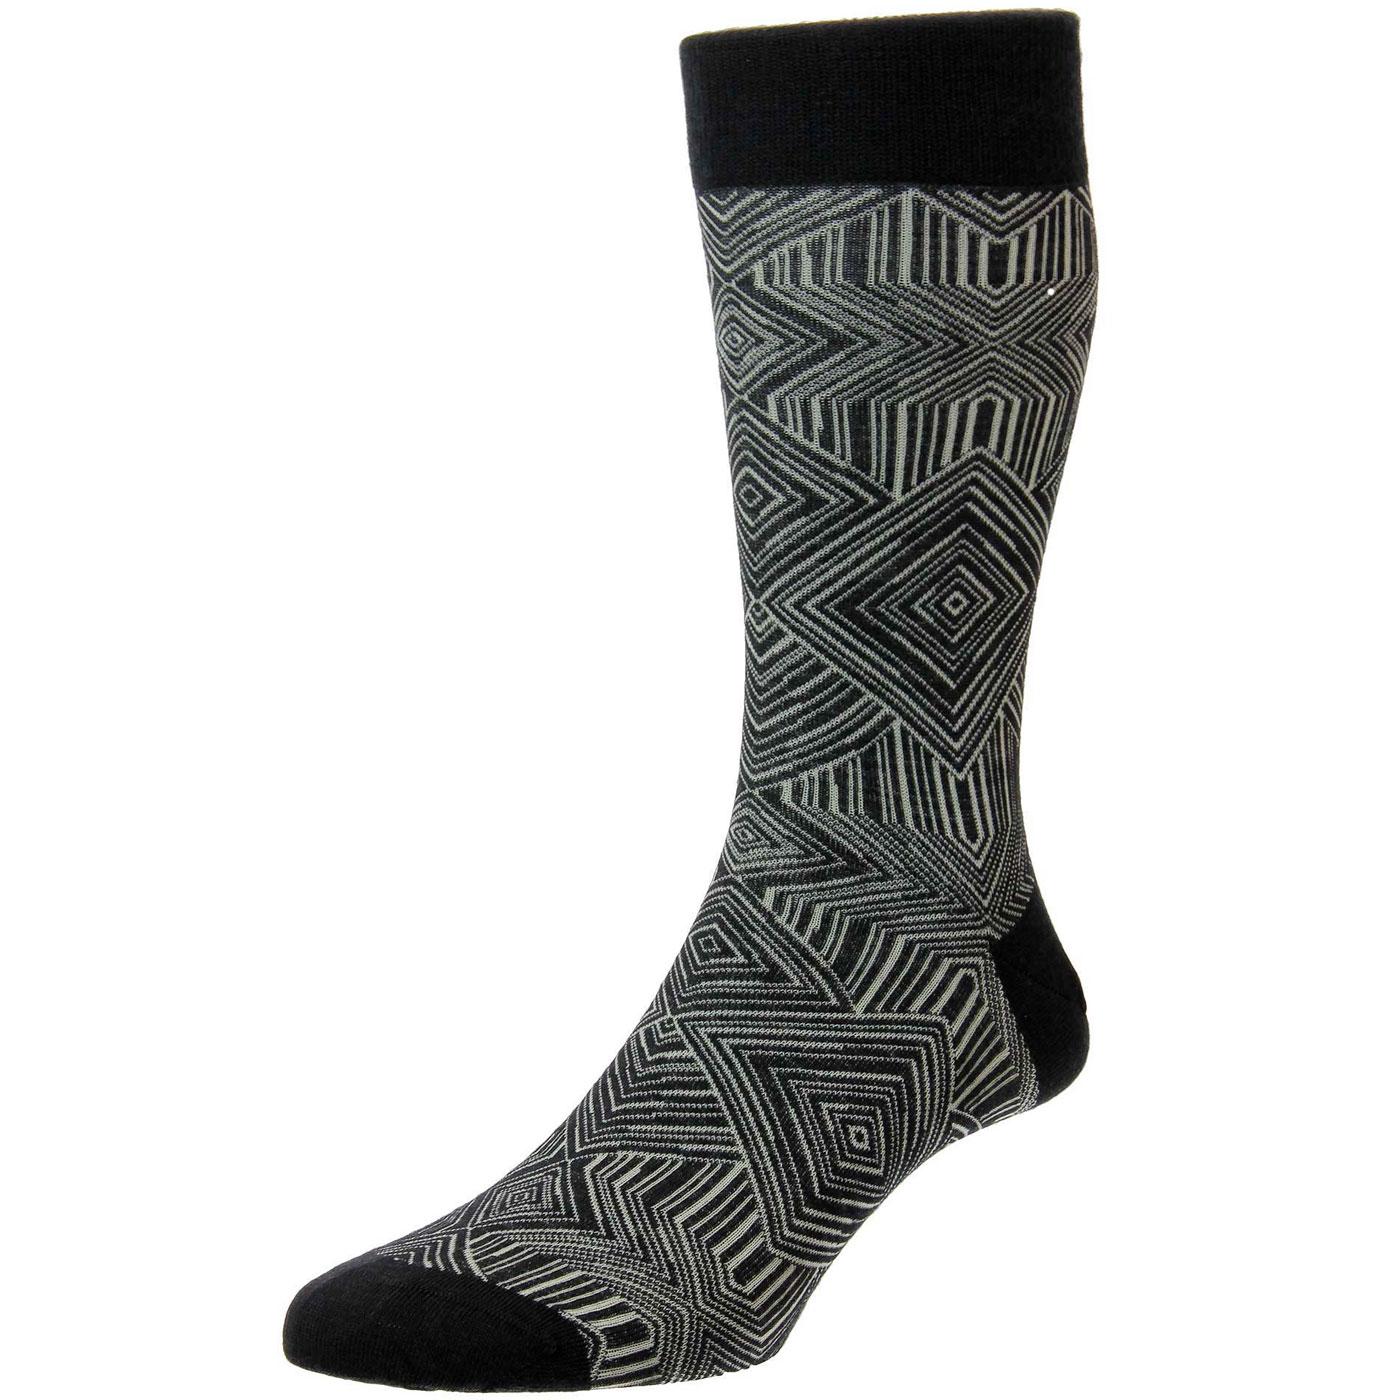 PANTHERELLA Glaser Op Art Made in England Socks in Black